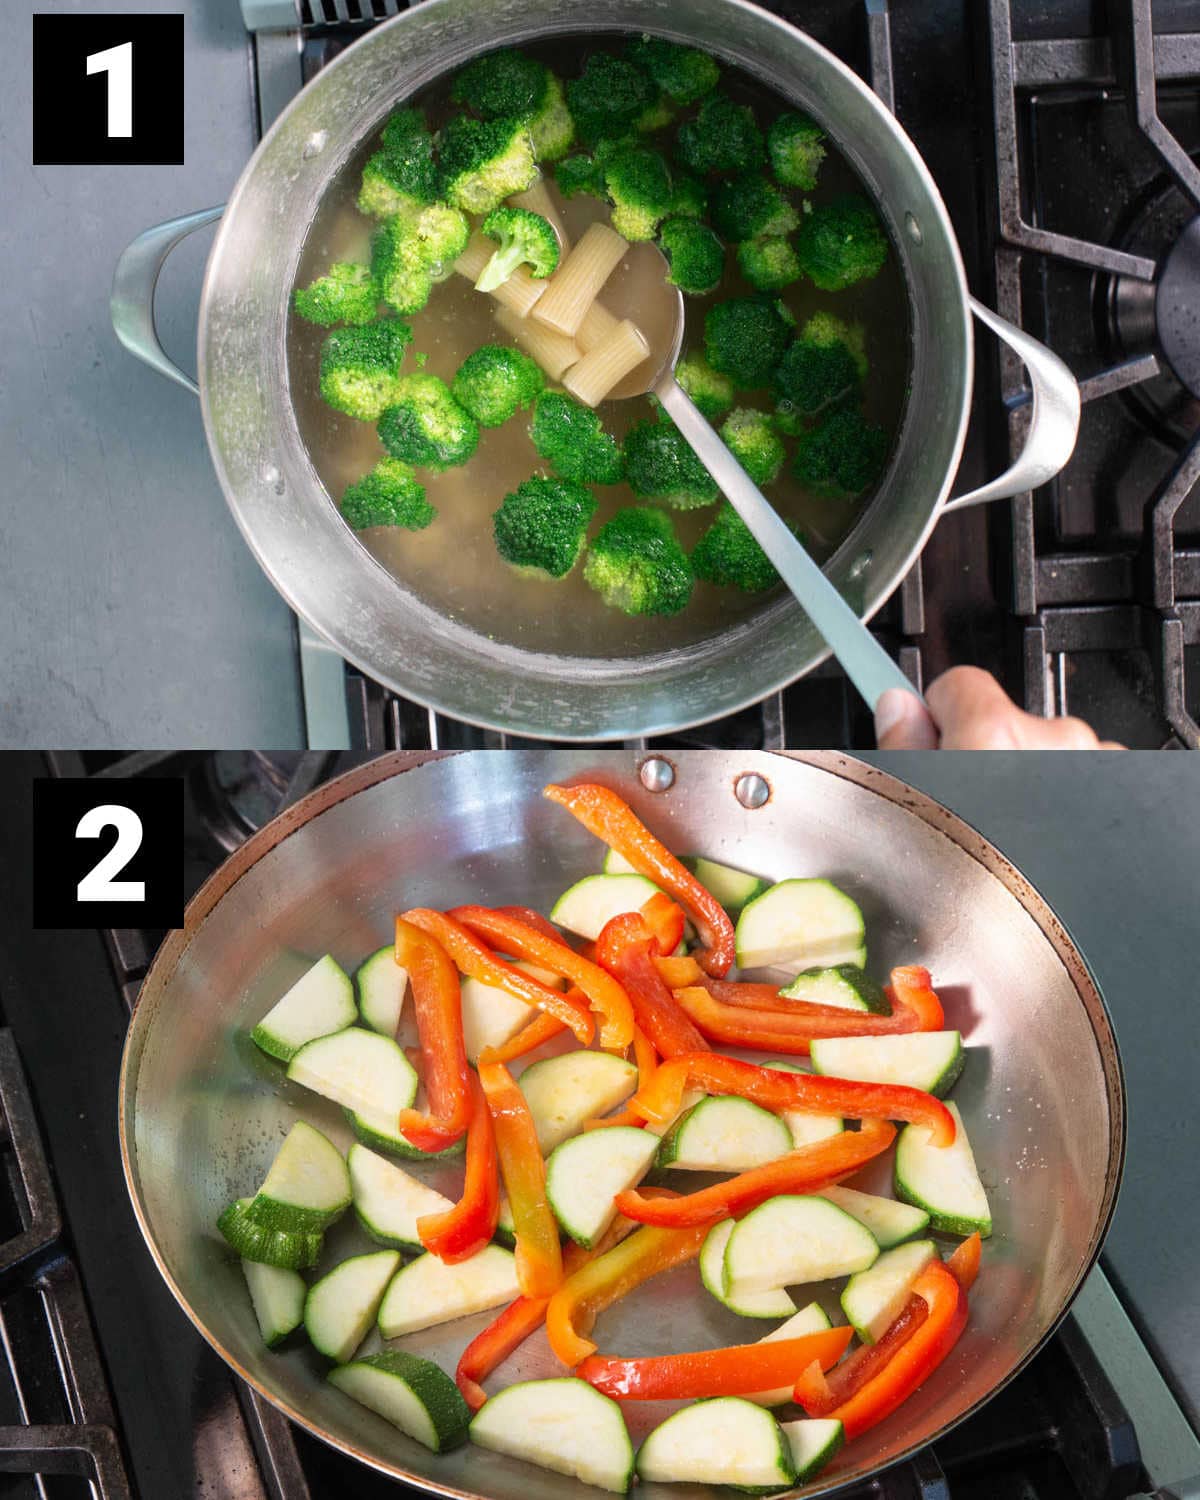 make rigatoni and broccoli, and then saute veggies in a pan